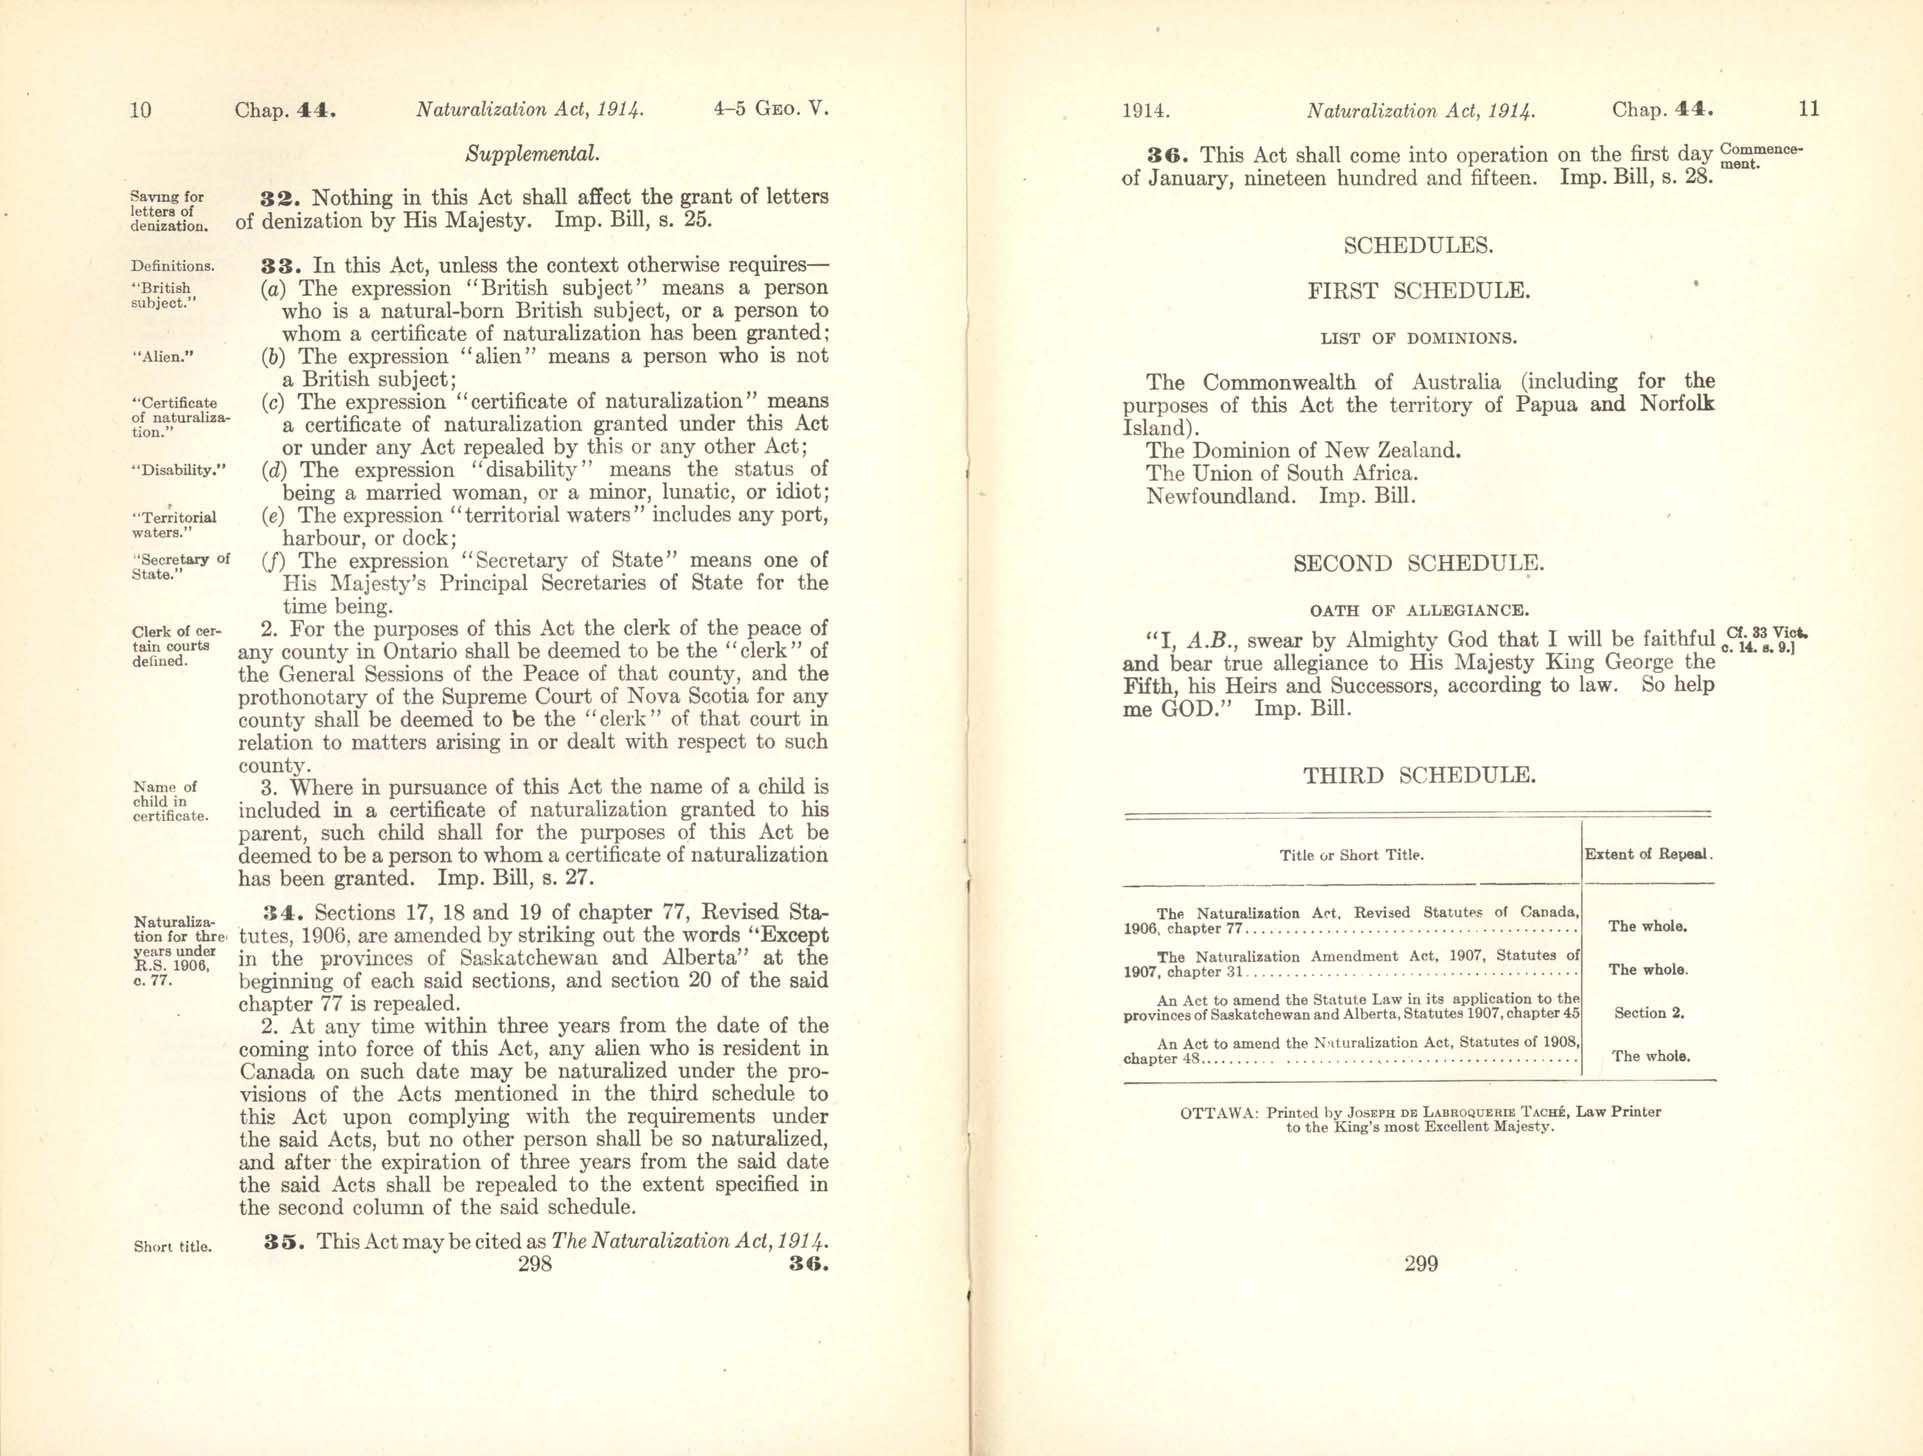 Page 298, 299 Naturalization Act, 1914